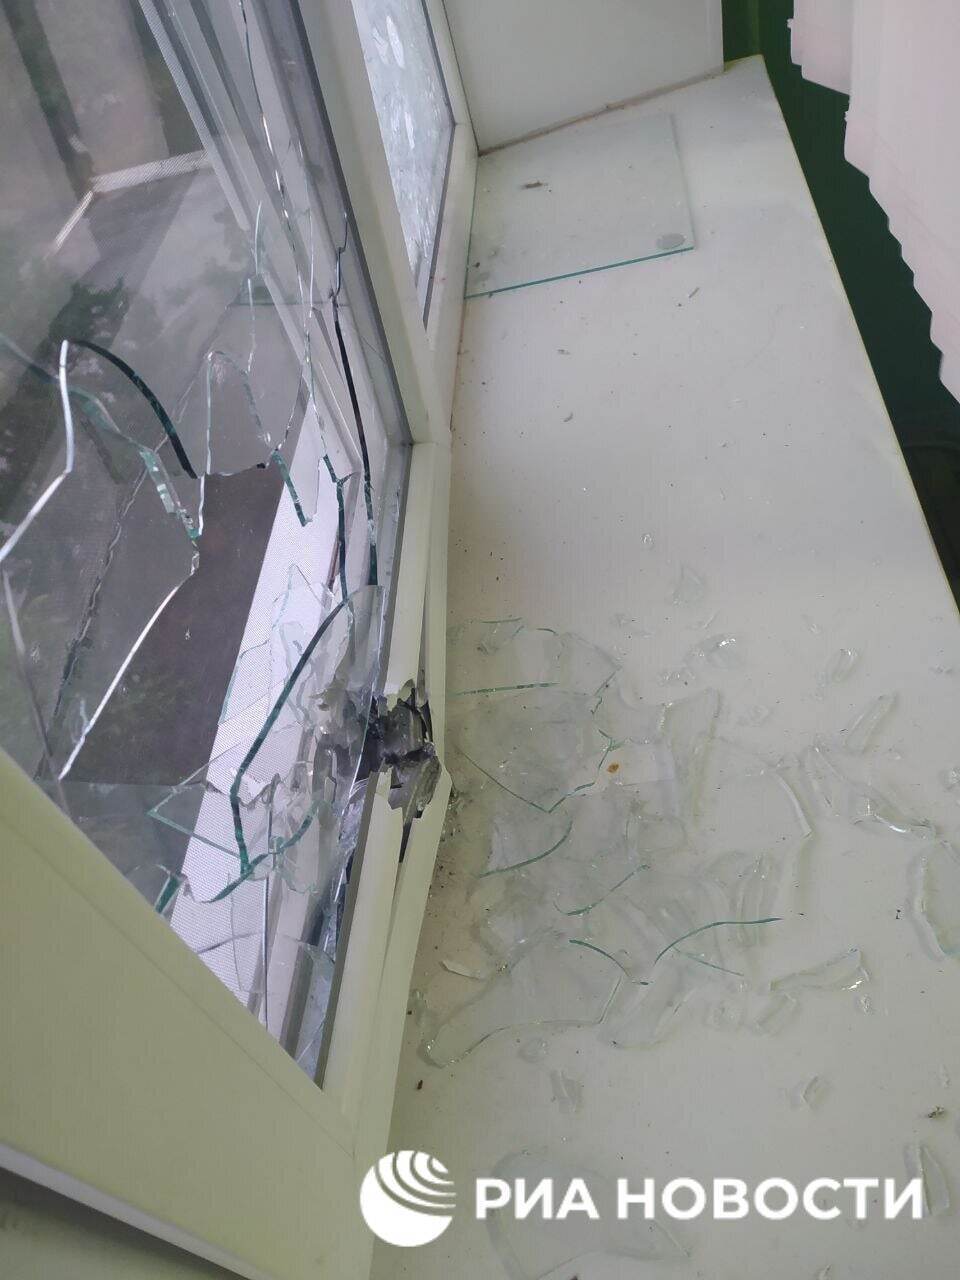 разбитое оконное стекло